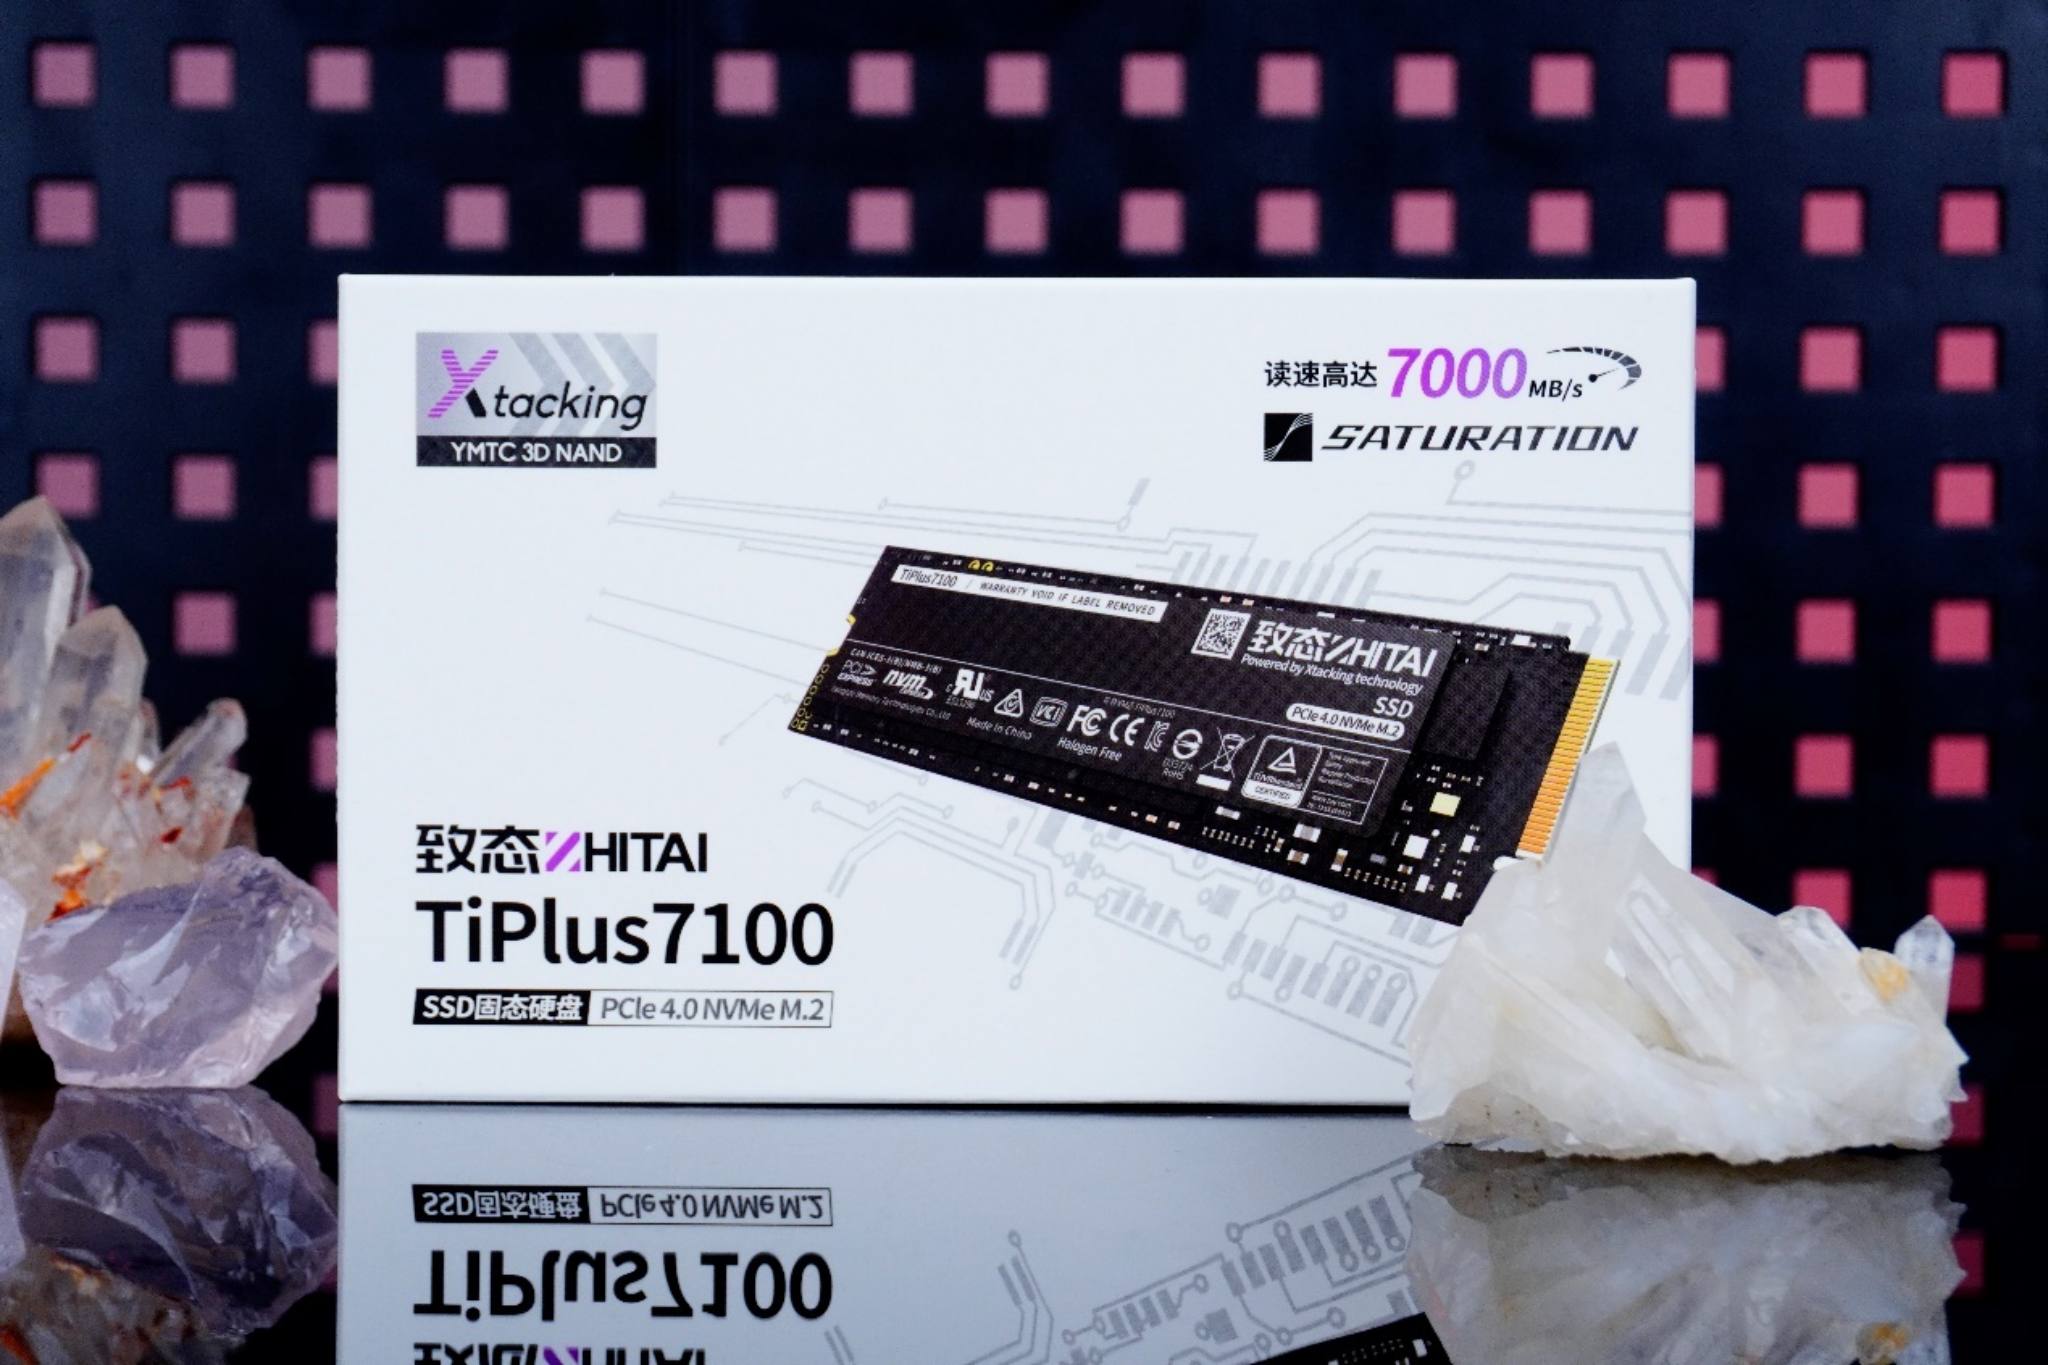 013 Zhitai TiPlus 7100 1.jpg